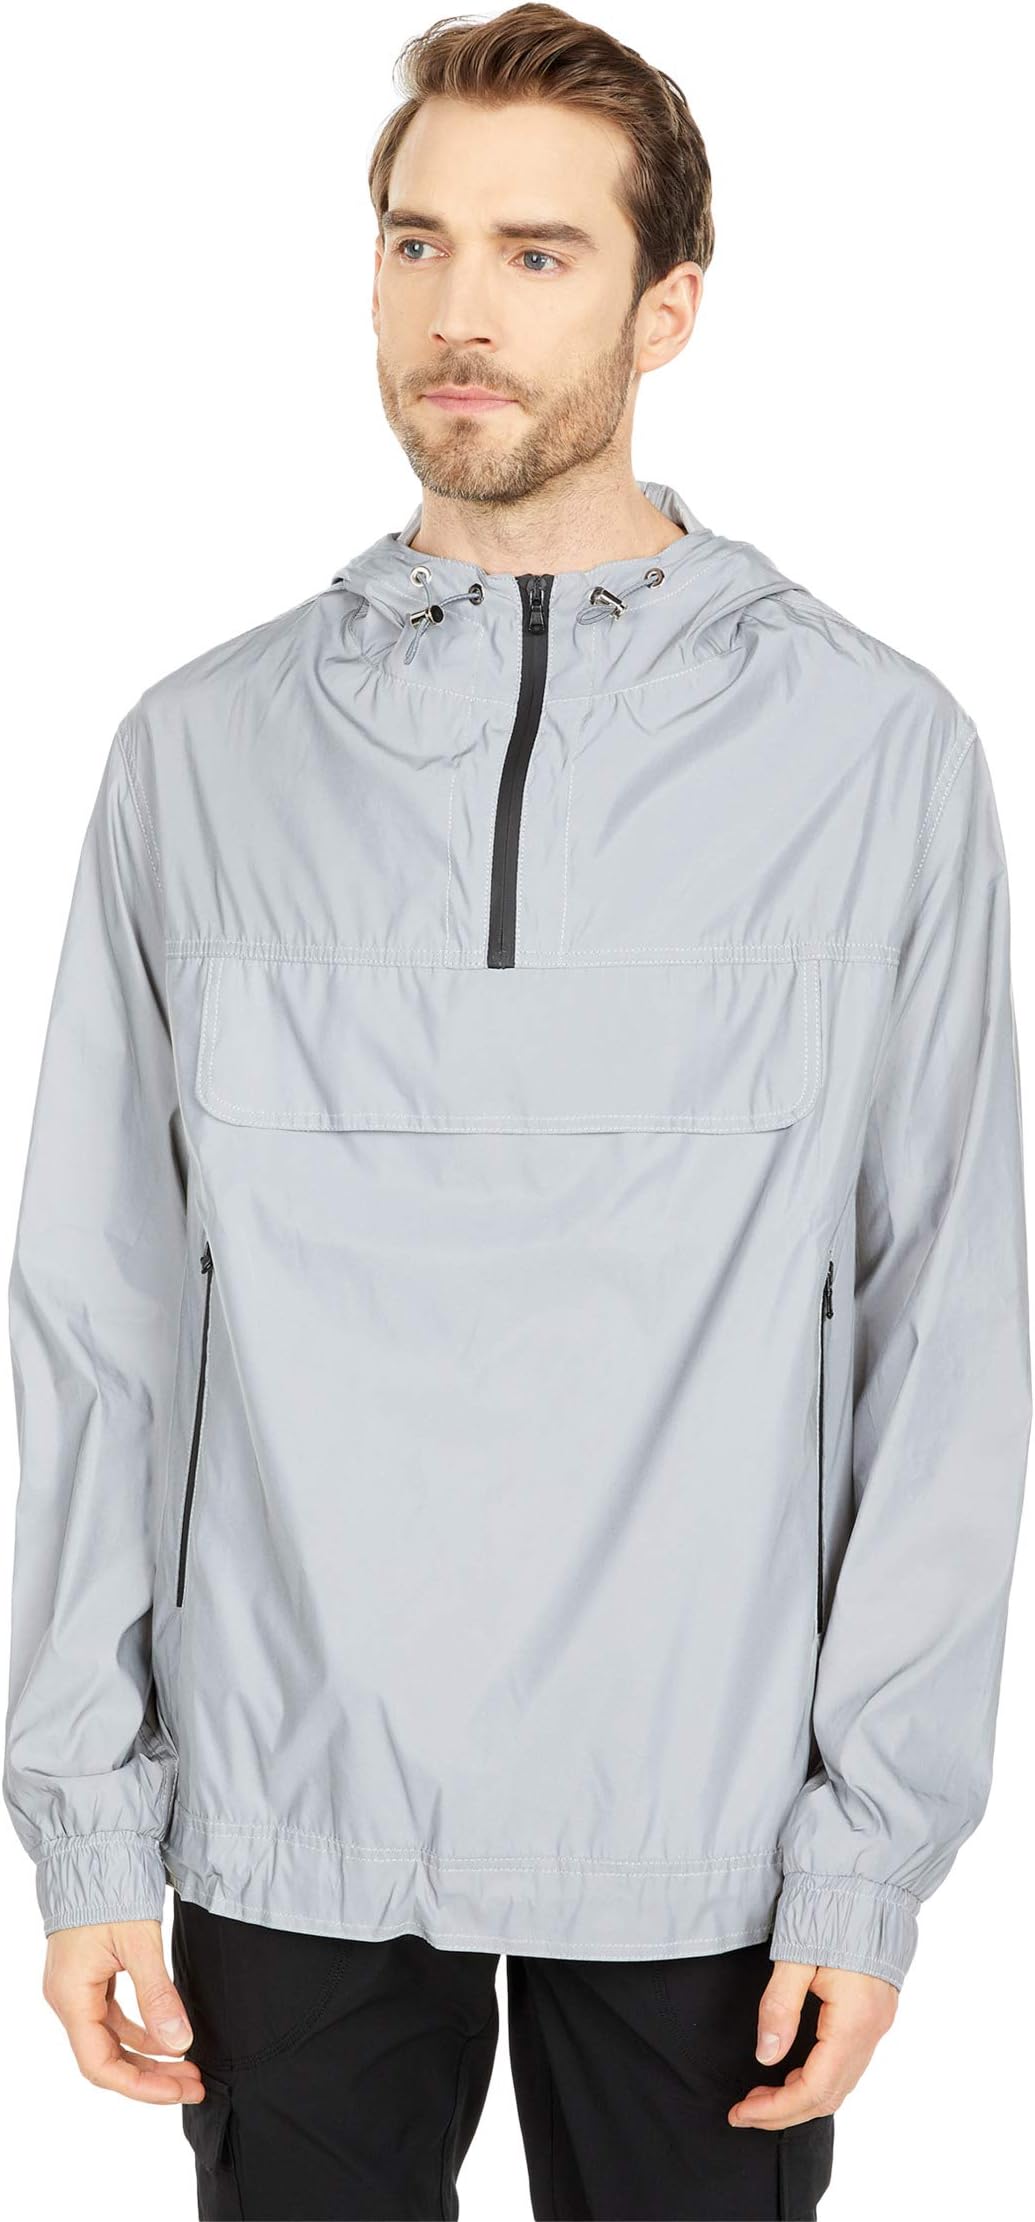 Куртка Windbreaker Reflex Jacket Blue Marble Paris, серый жилет с капюшоном closed цвет grey marble